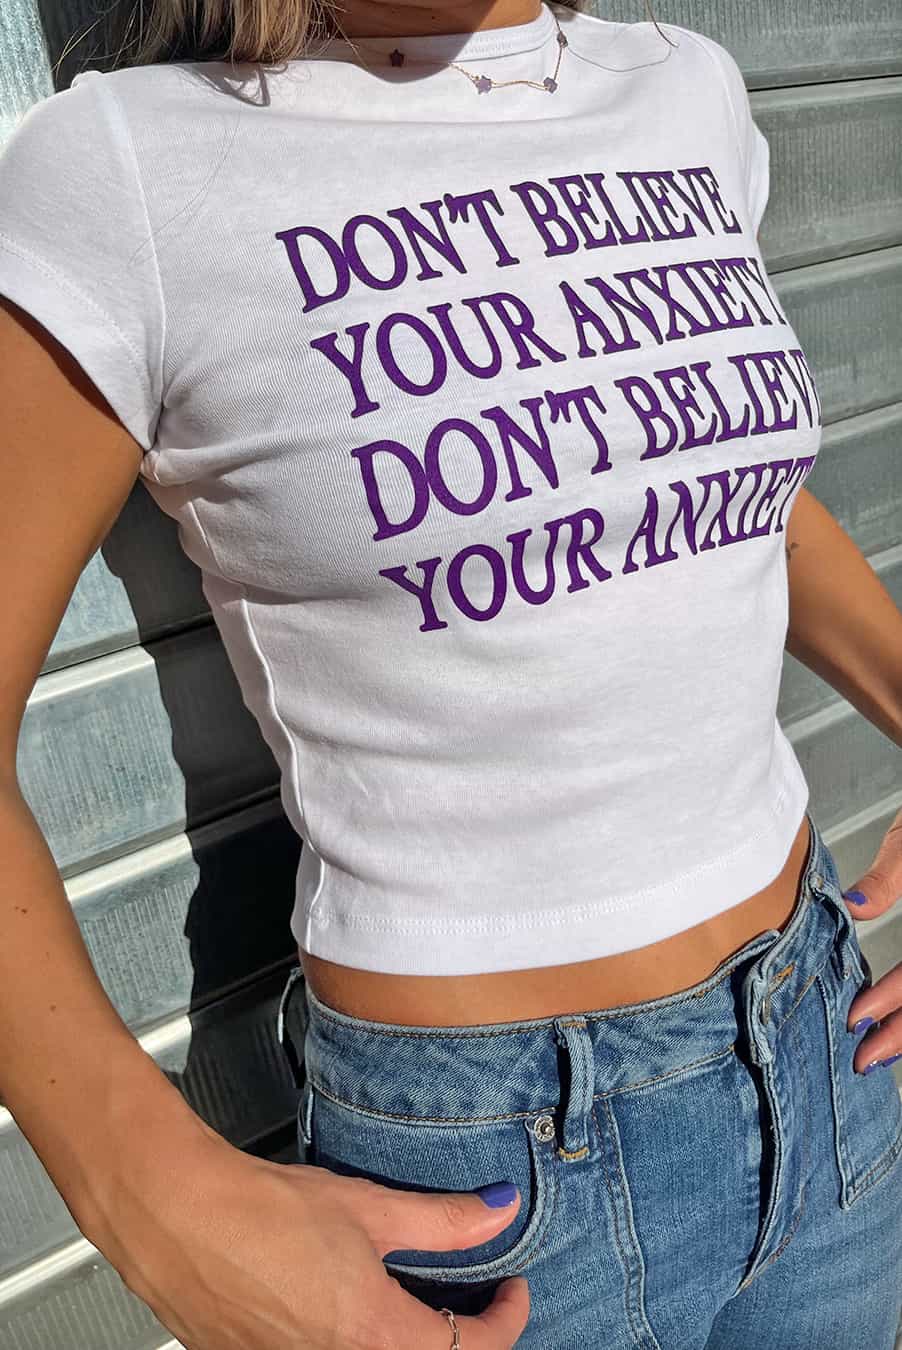 Don't believe t-shirt